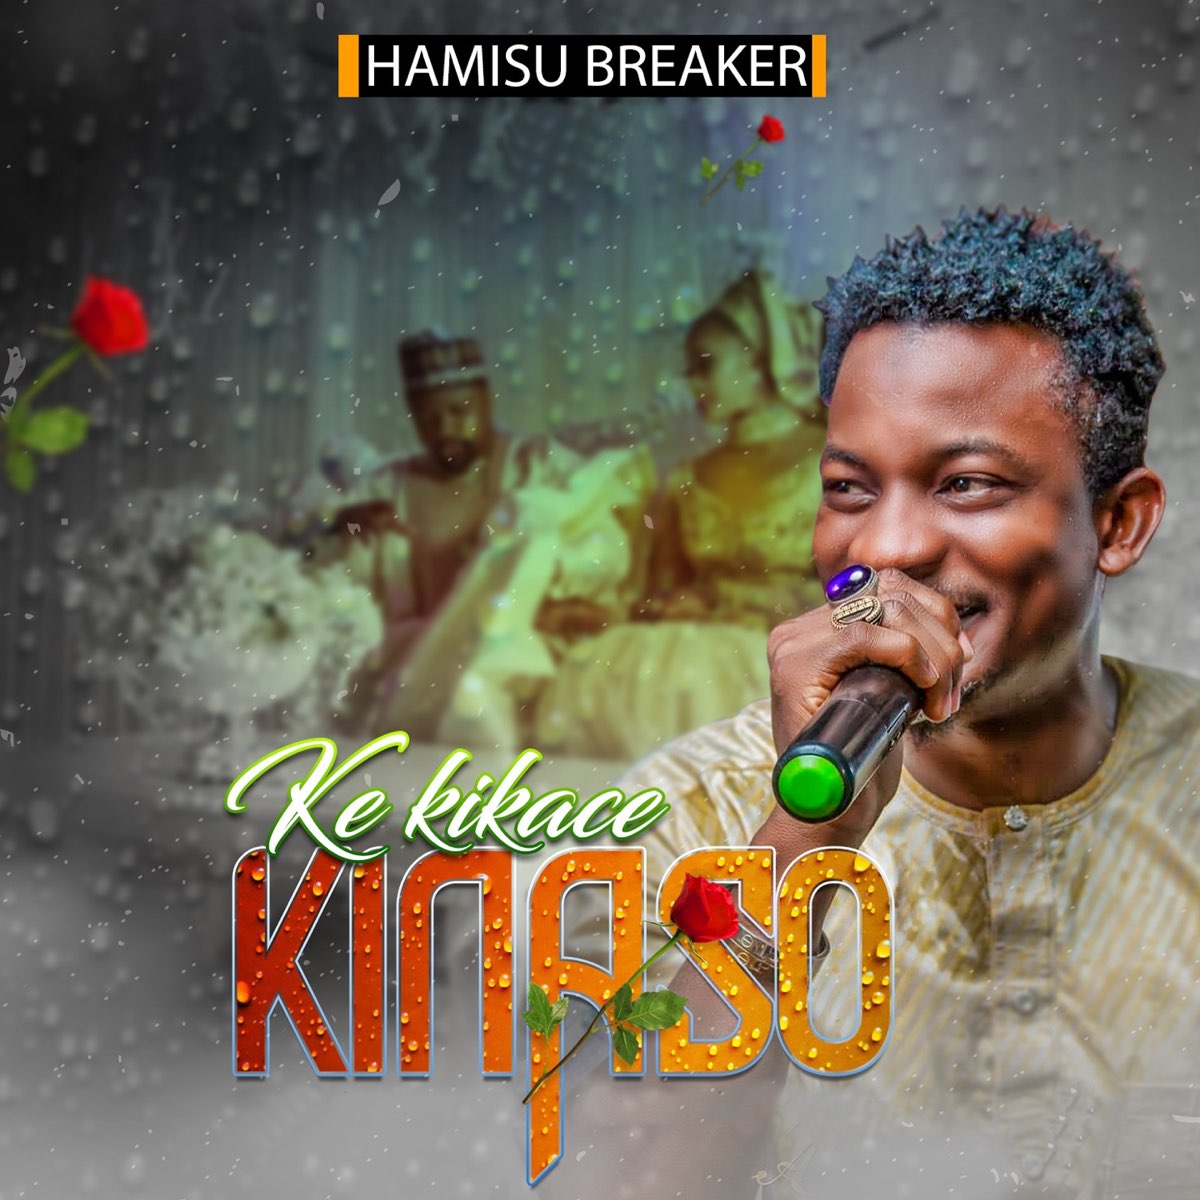 Ke Kikace Kinaso - Single by Hamisu Breaker on Apple Music